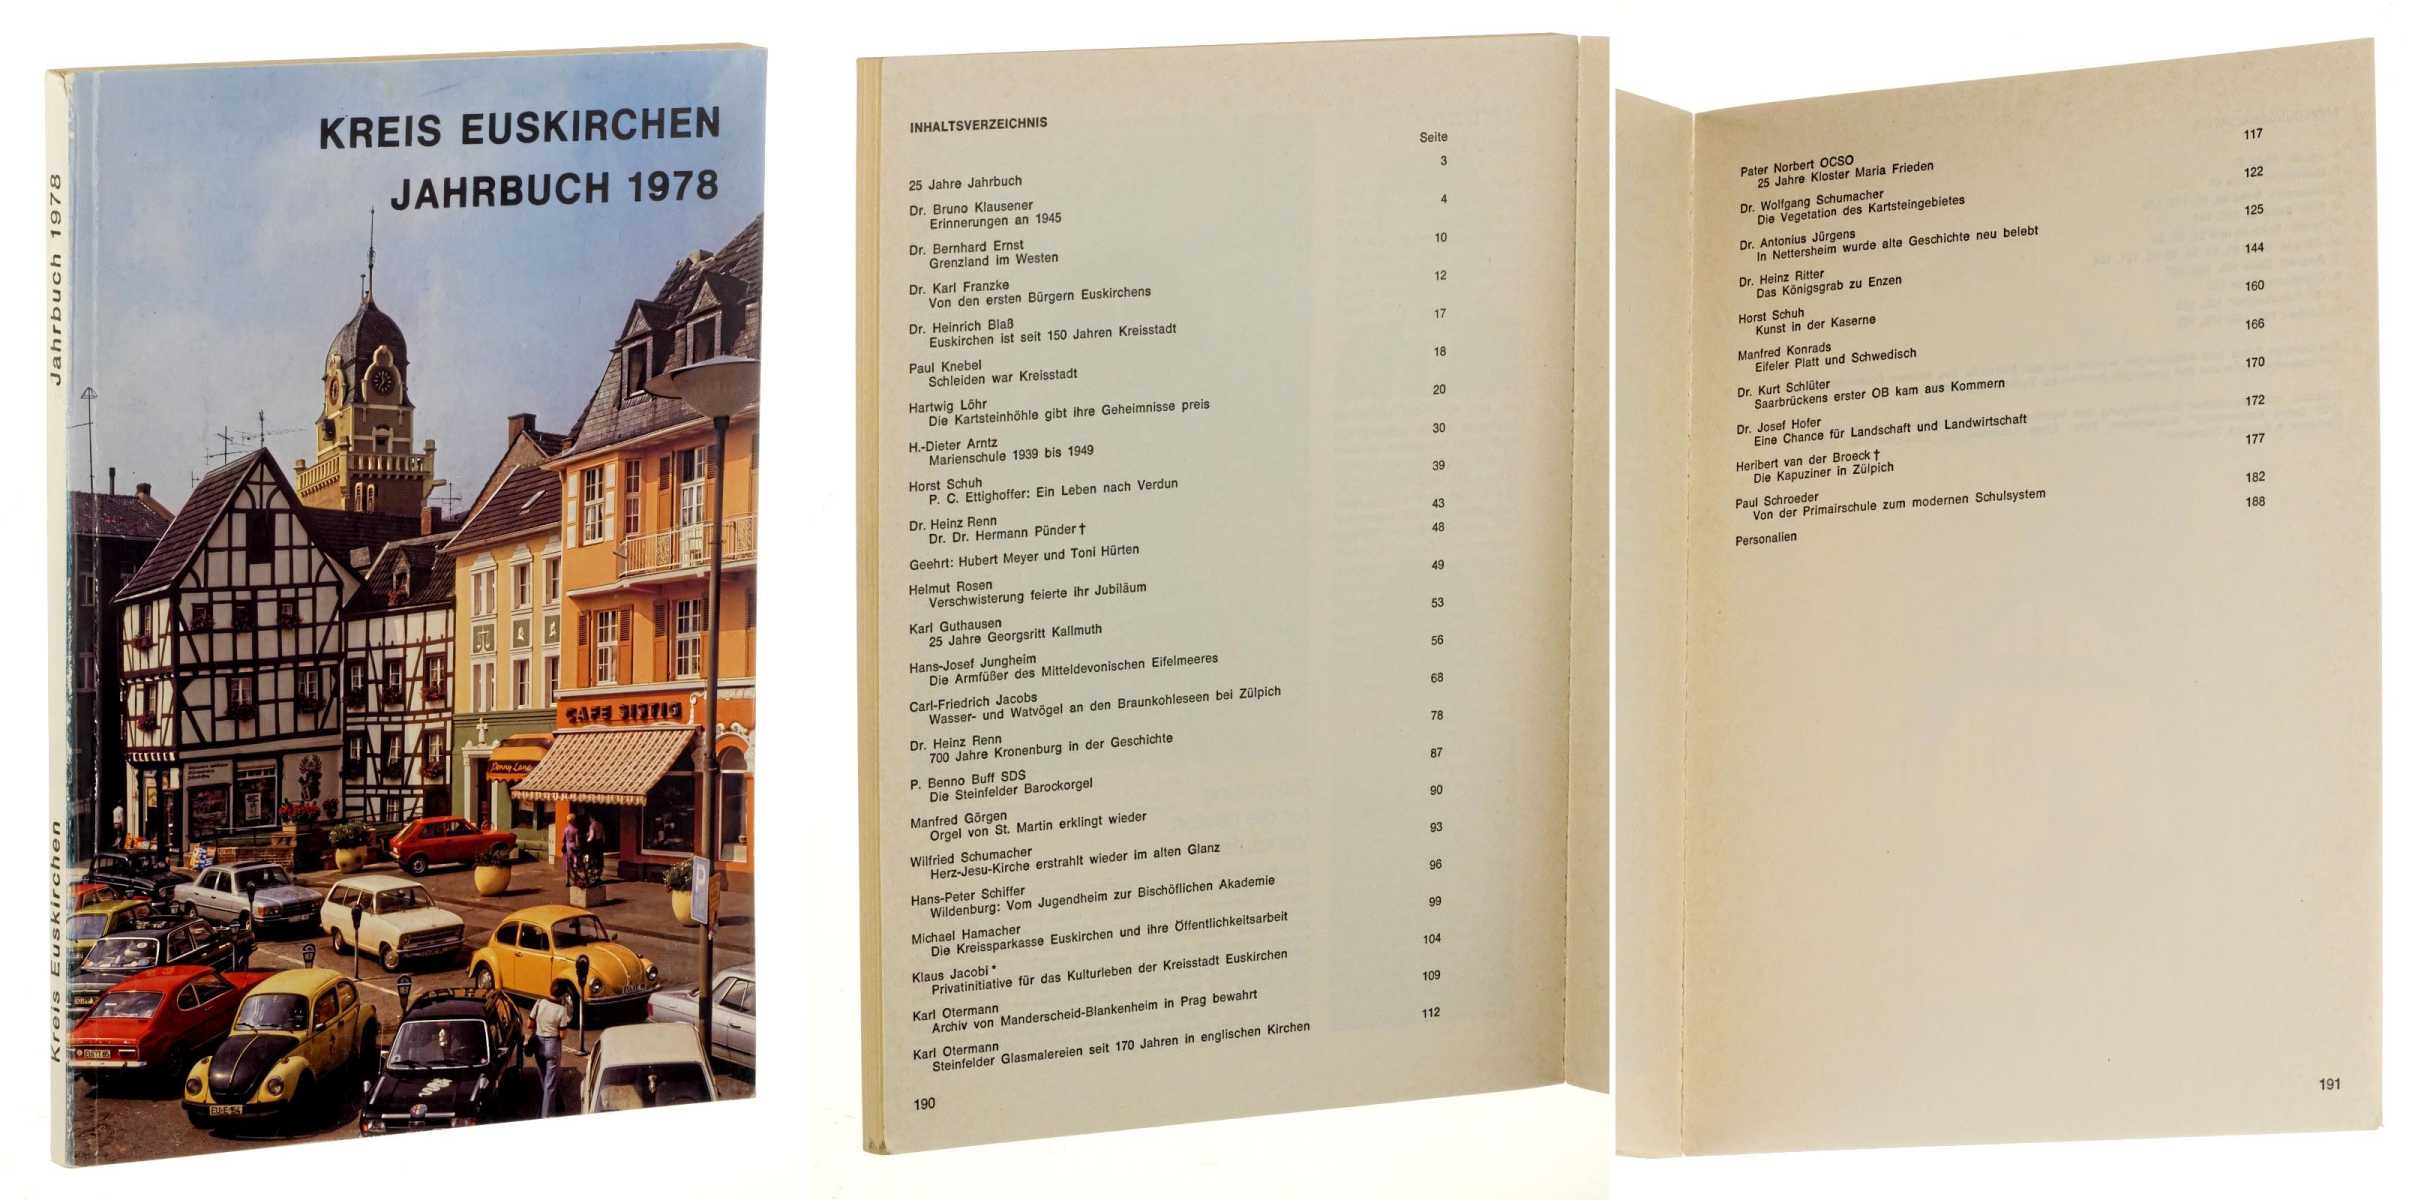   Jahrbuch des Kreises Euskirchen 1978. 